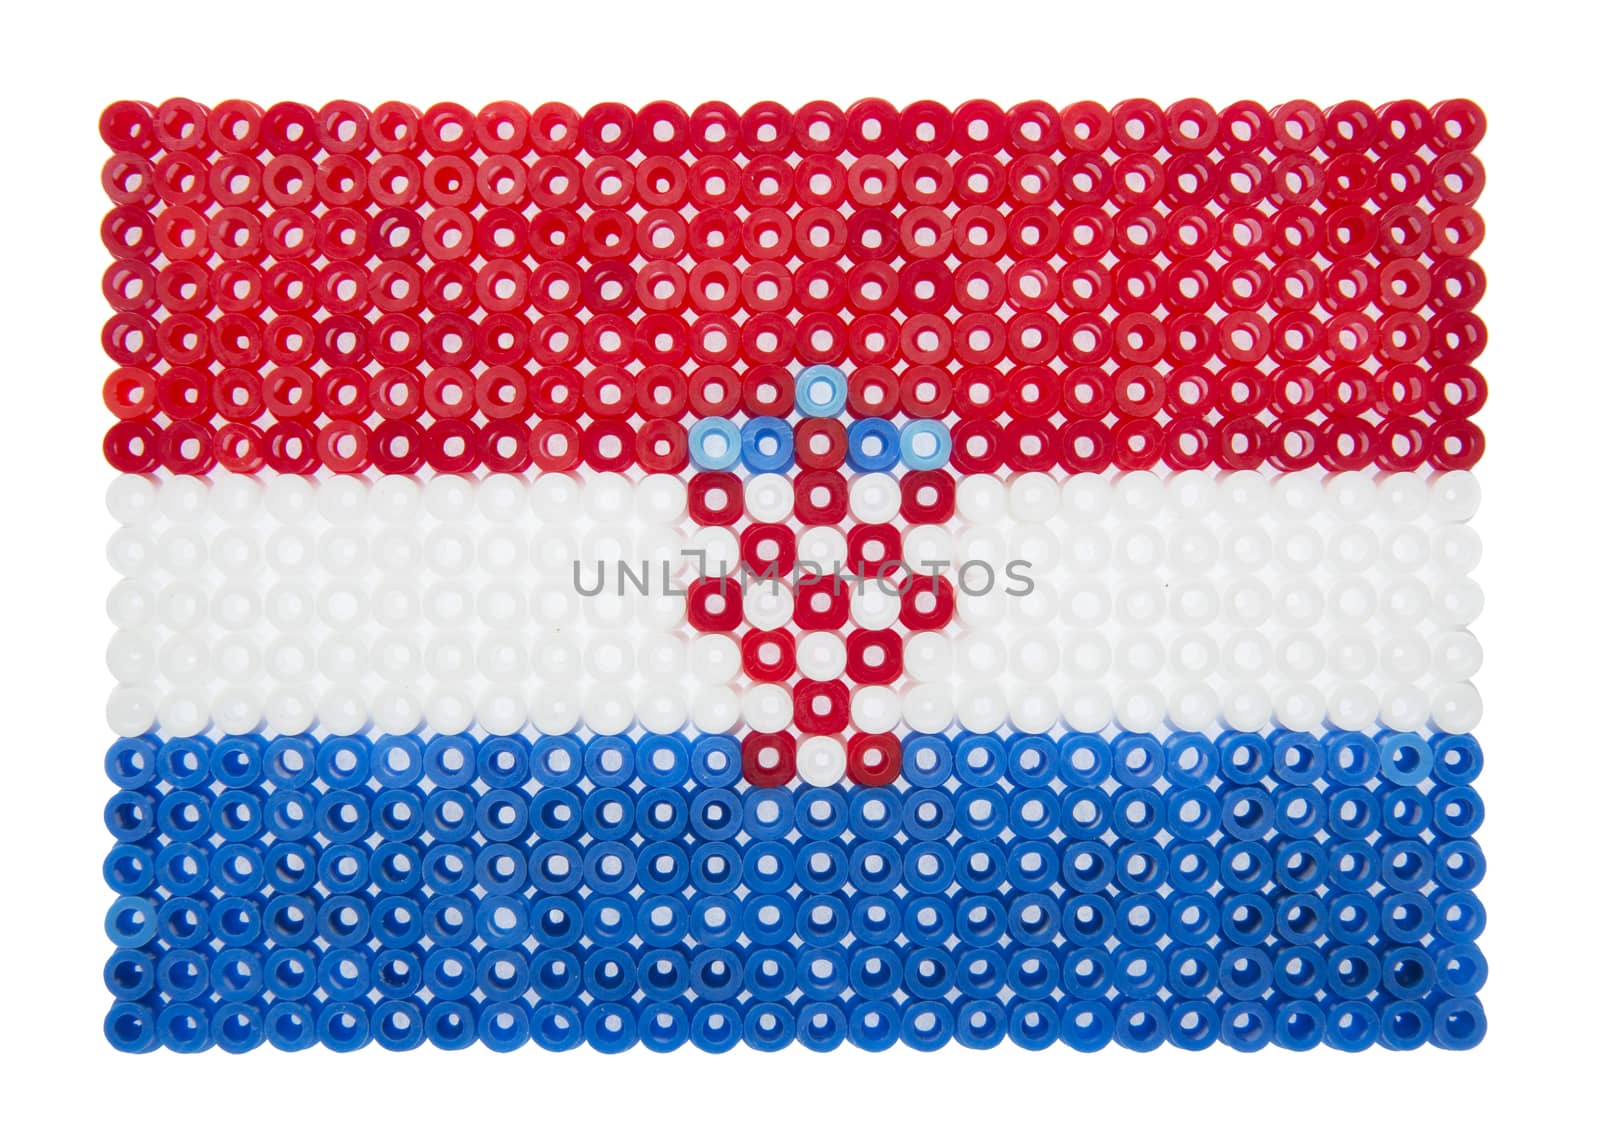 Croatian Flag made of plastic pearls